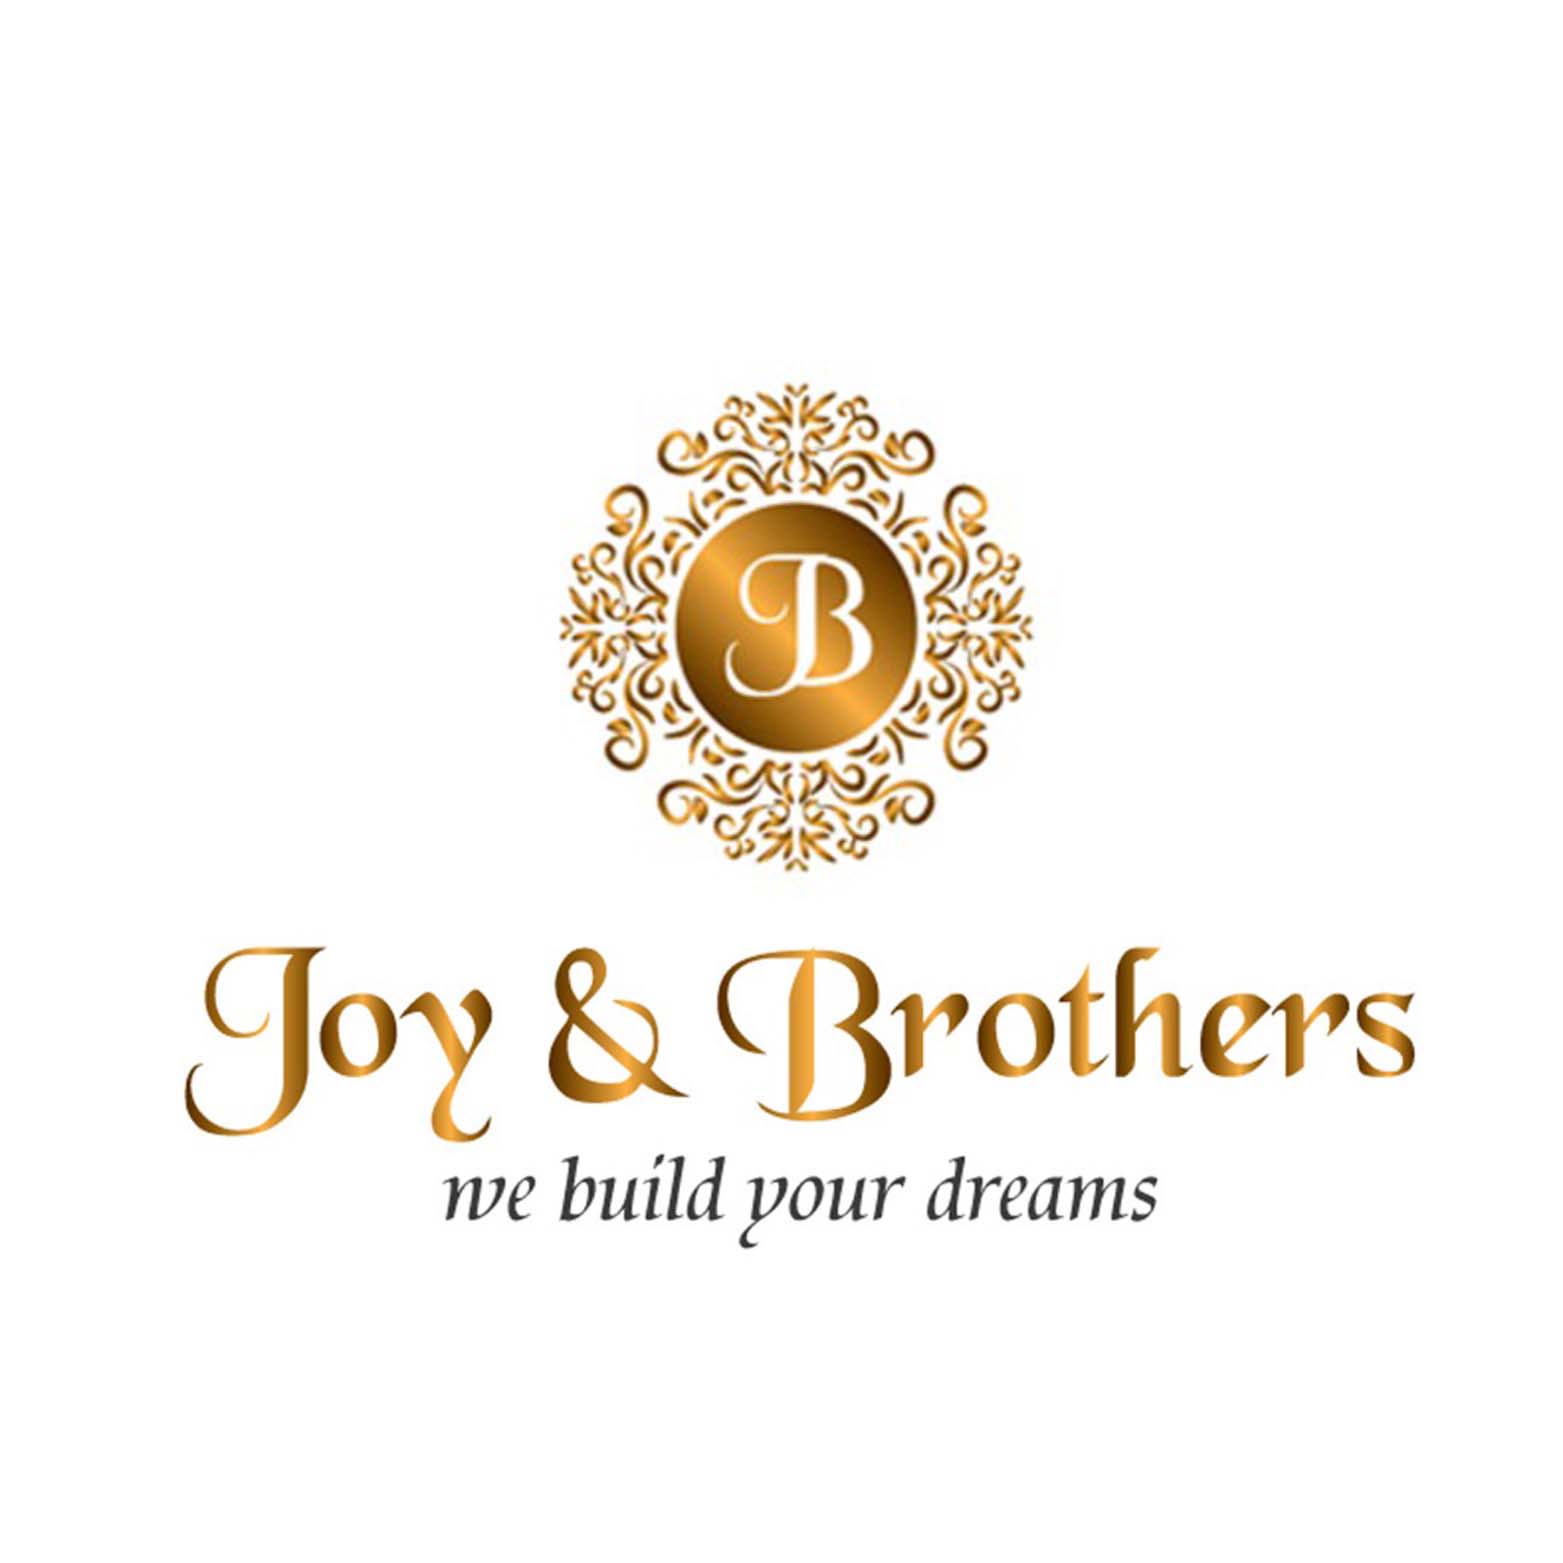 Joy & Brothers